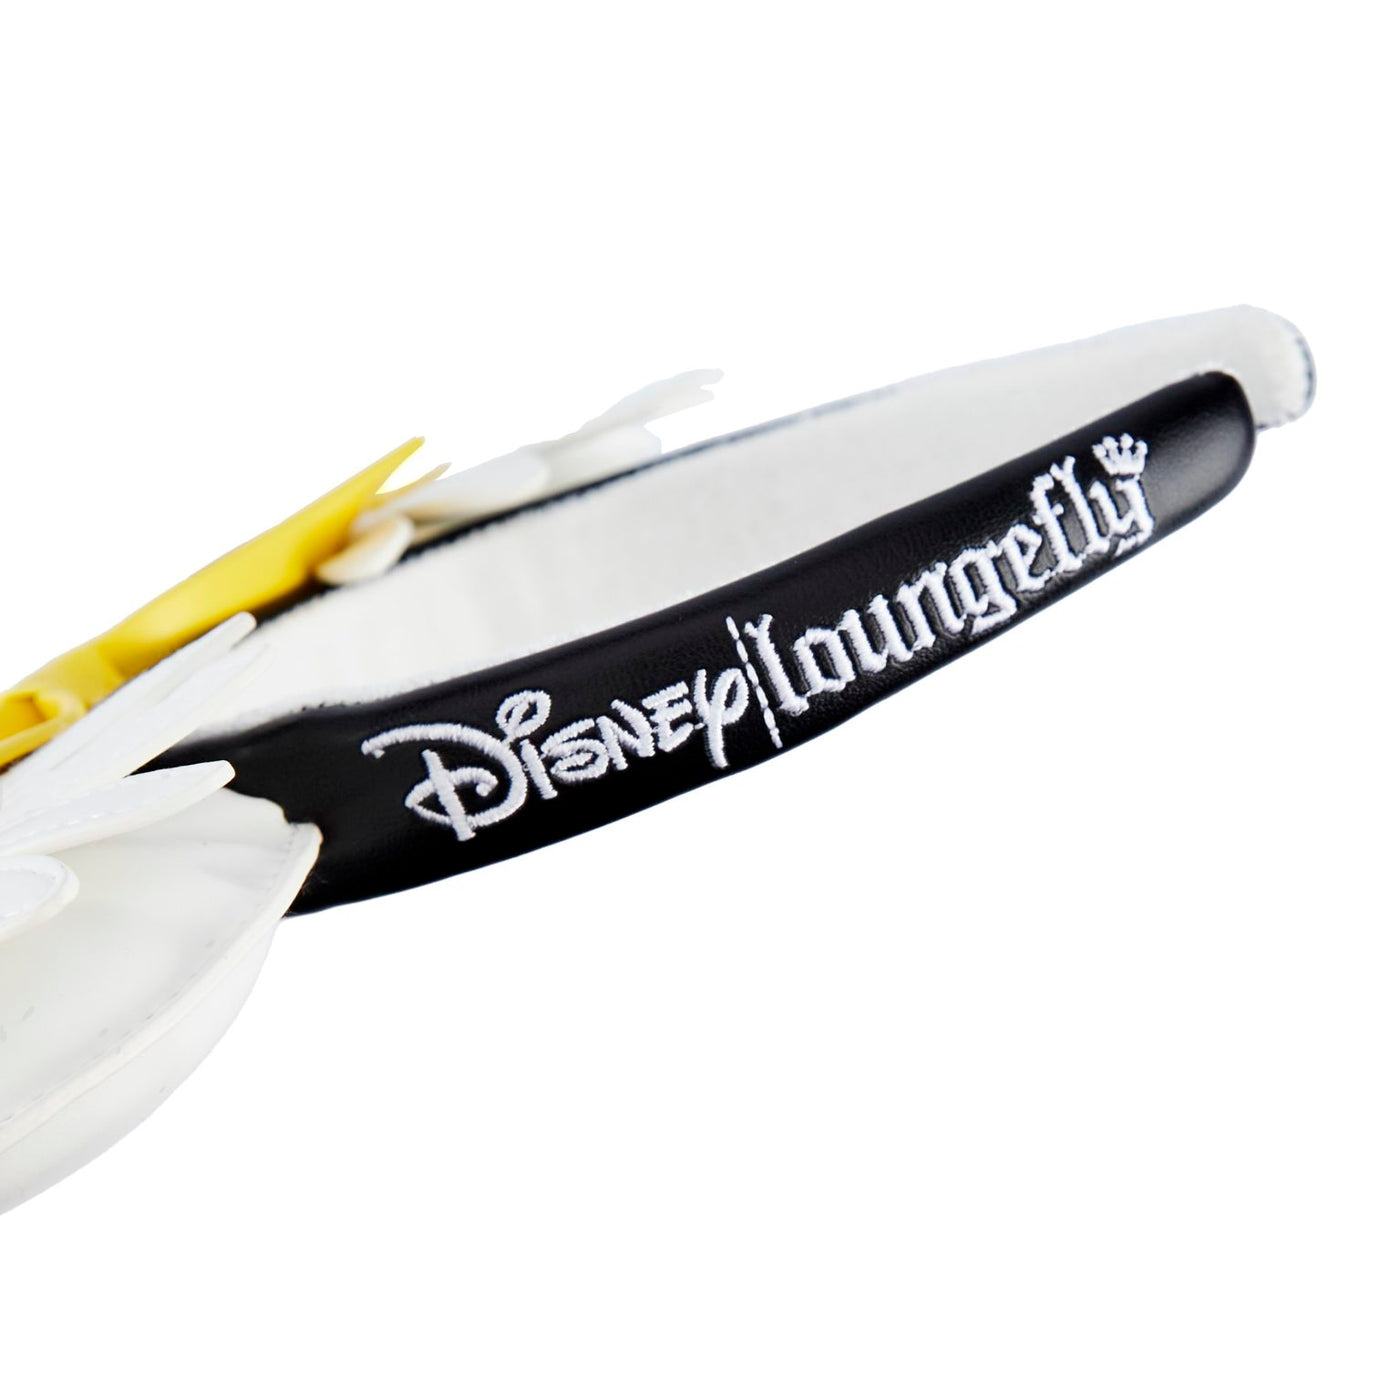 Loungefly Disney Minnie Mouse Daisies Headband Ears